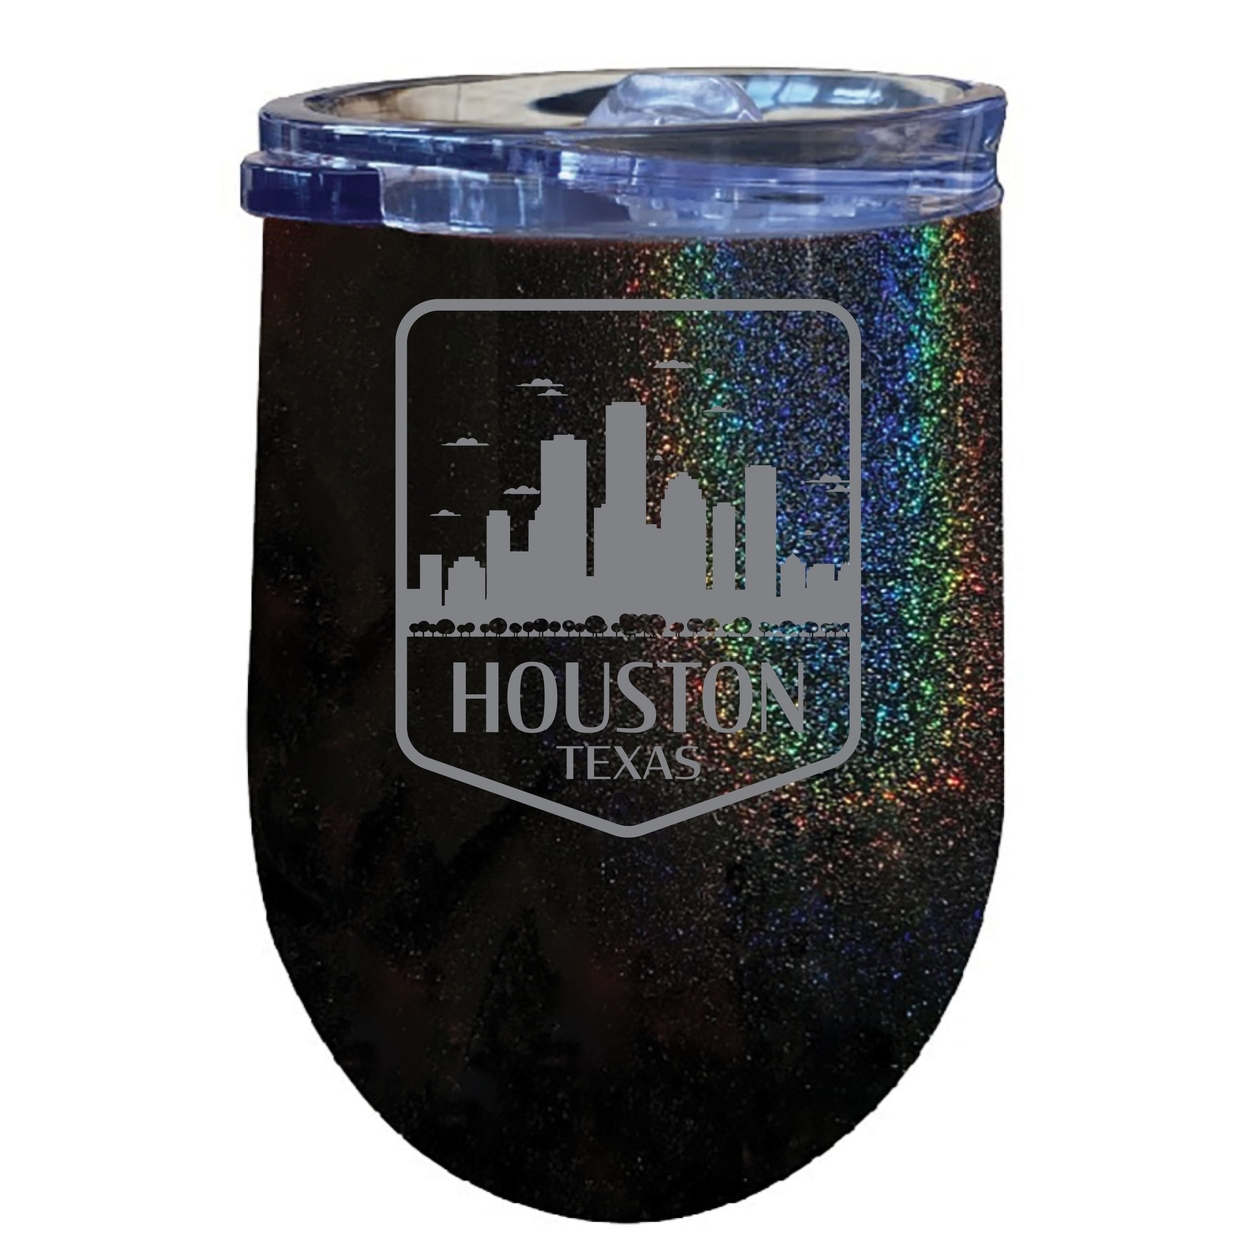 Houston Texas Souvenir 12 Oz Engraved Insulated Wine Stainless Steel Tumbler - Coral,,Single Unit